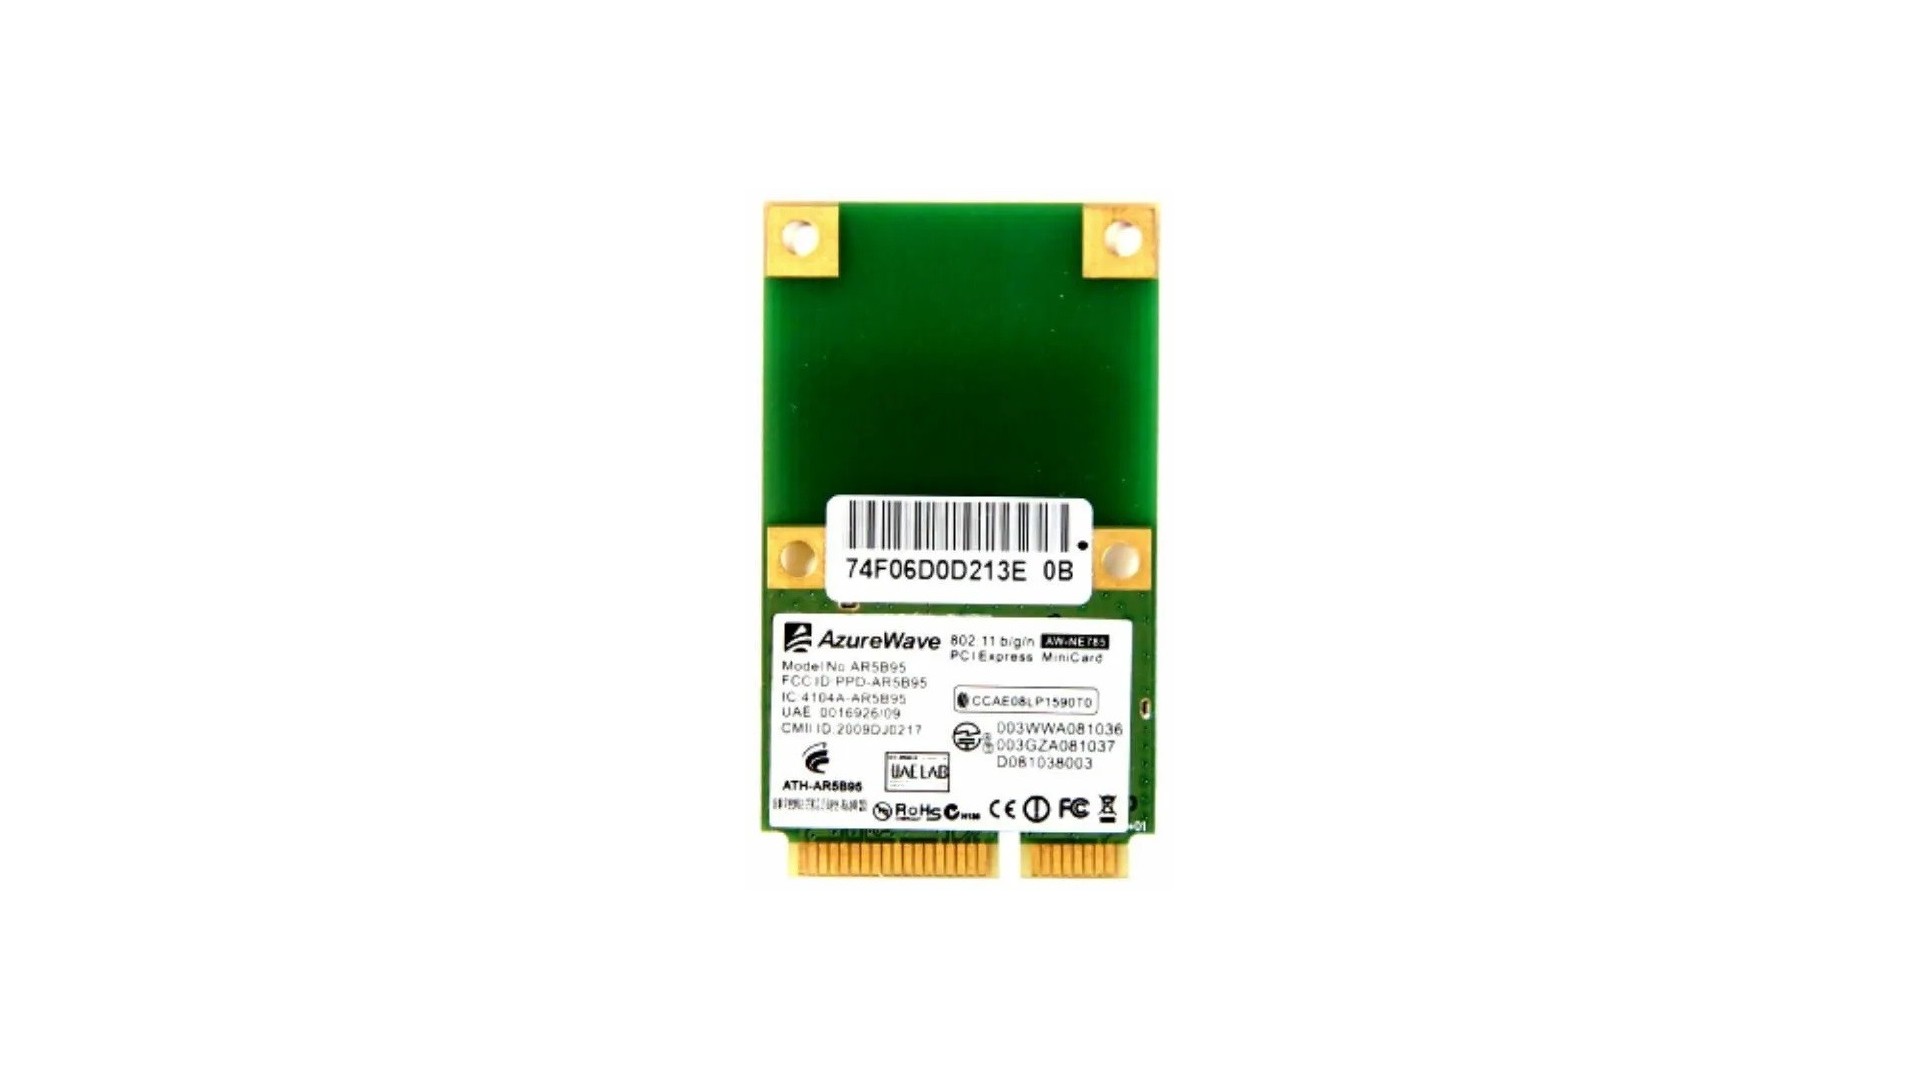 Azurewave AR5B95 WiFi card